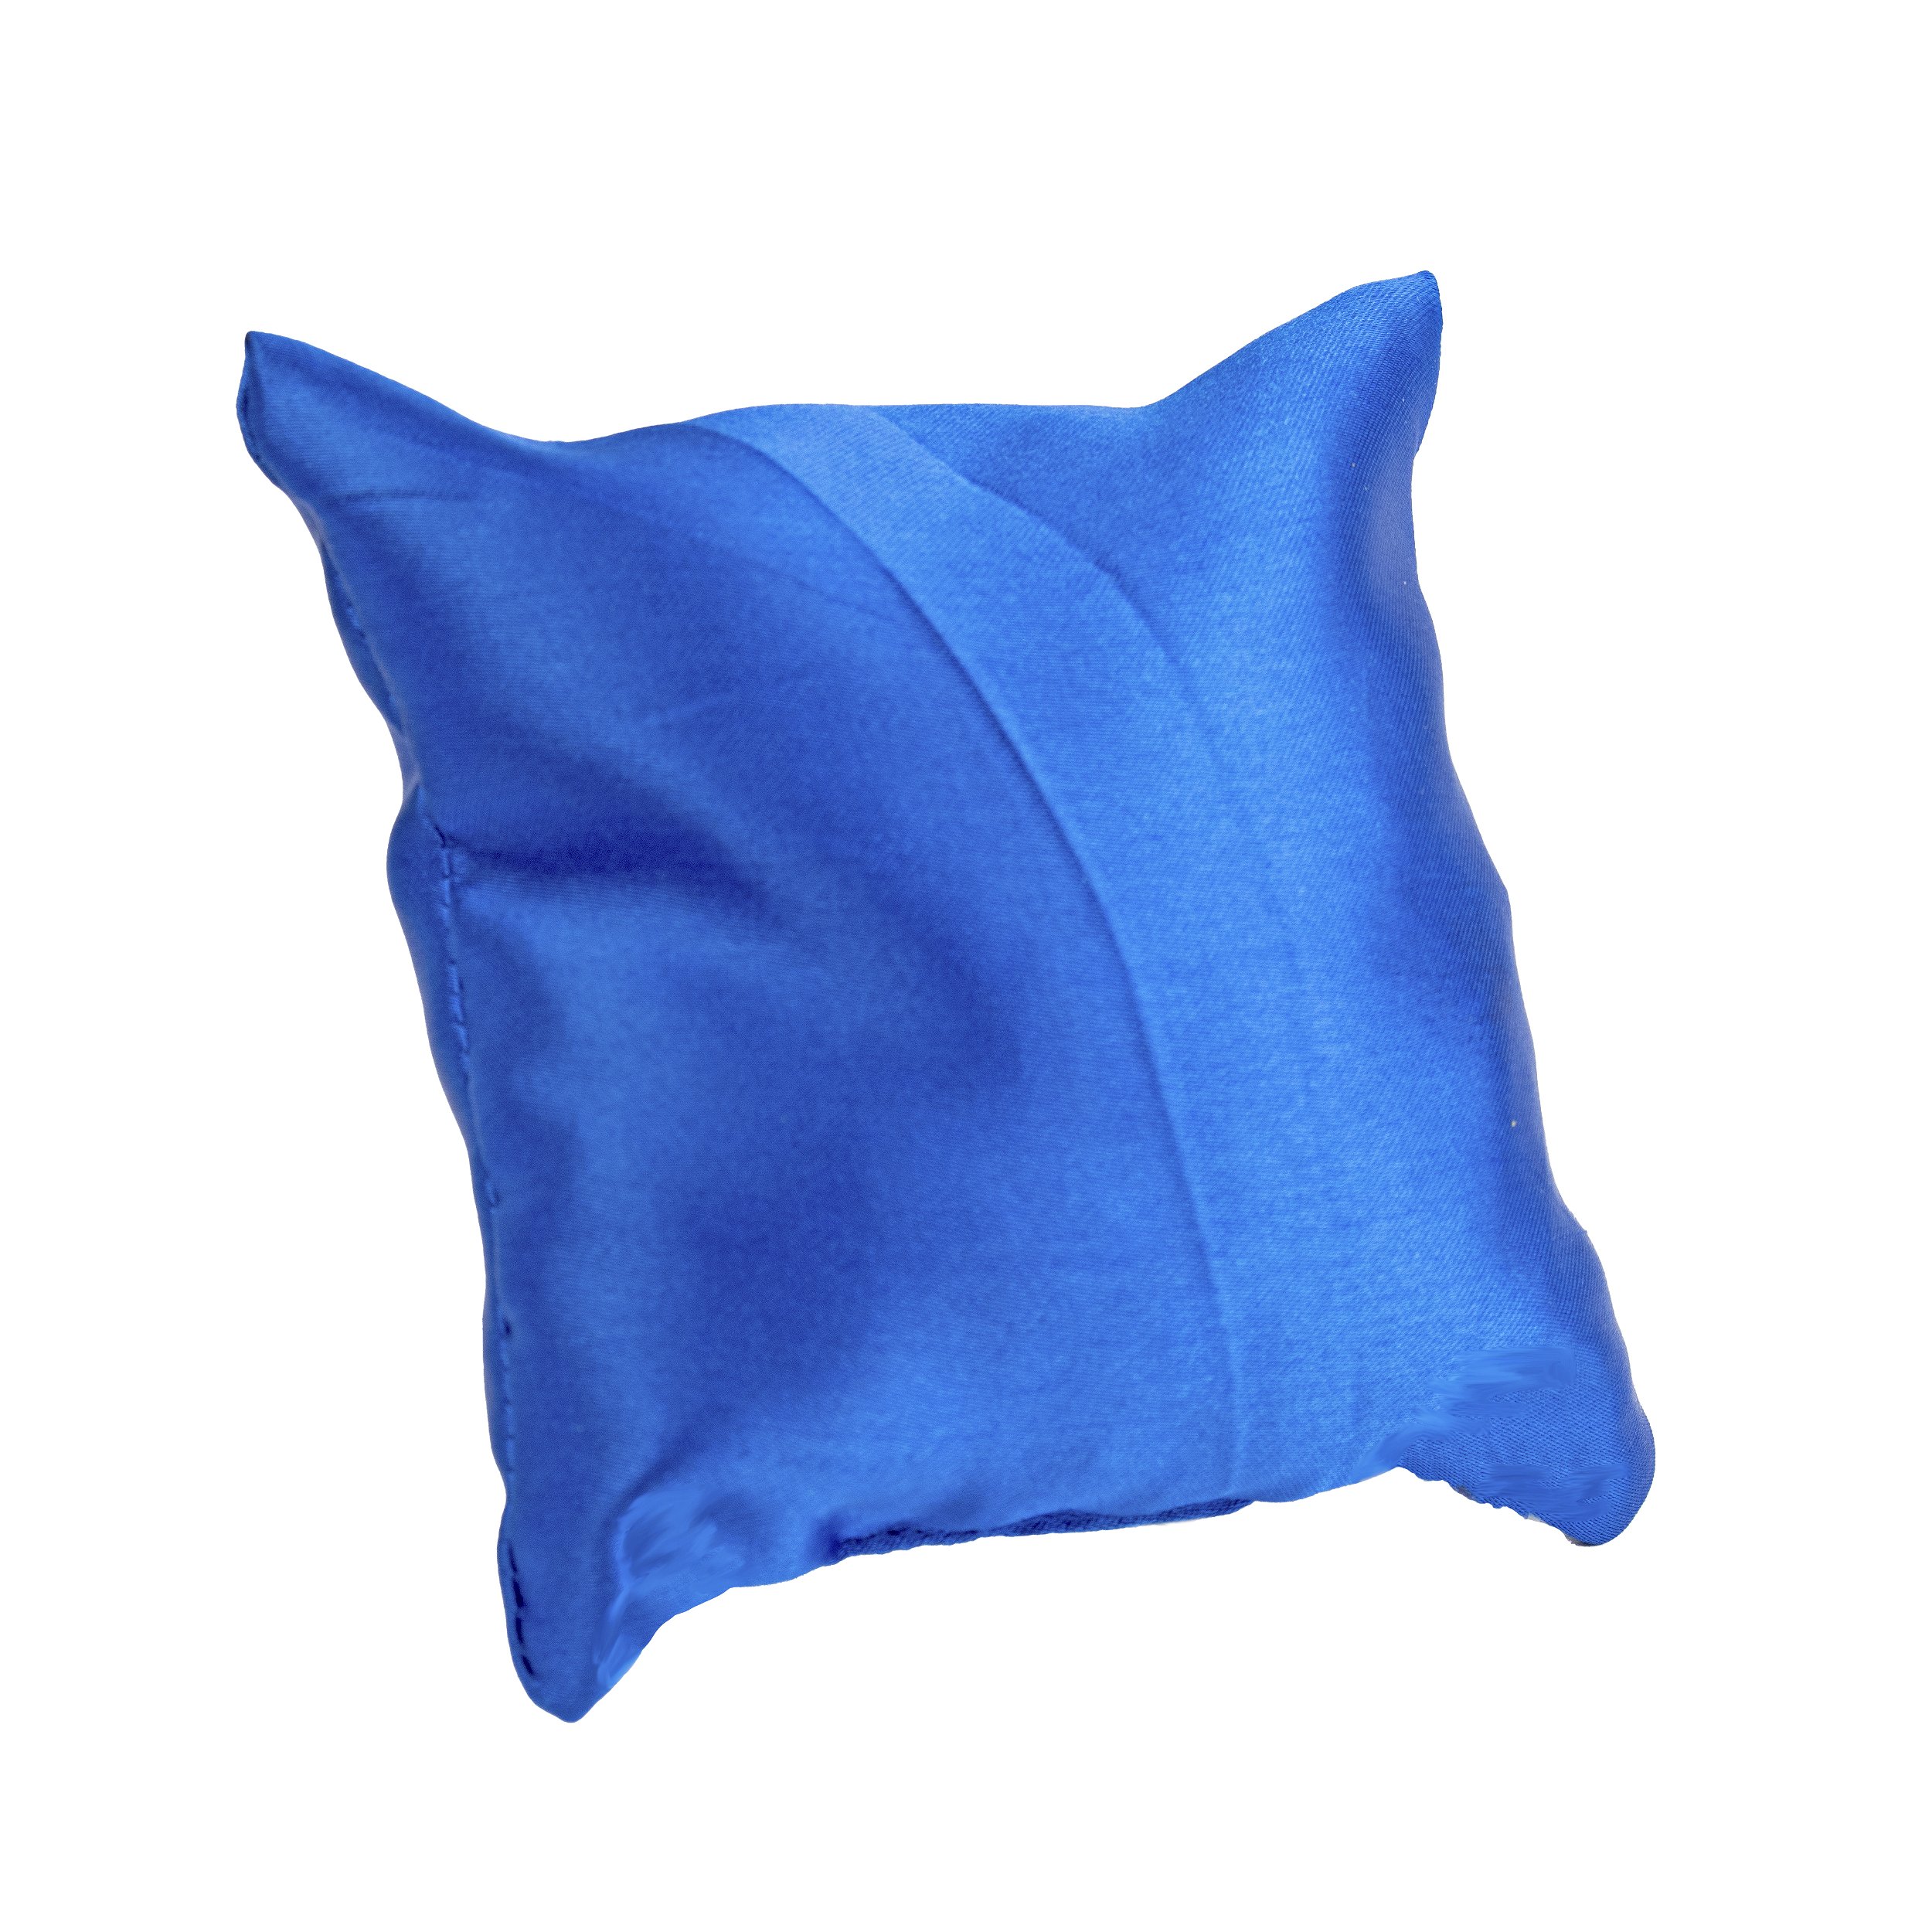 Blue Satin Square Cushion 4x4